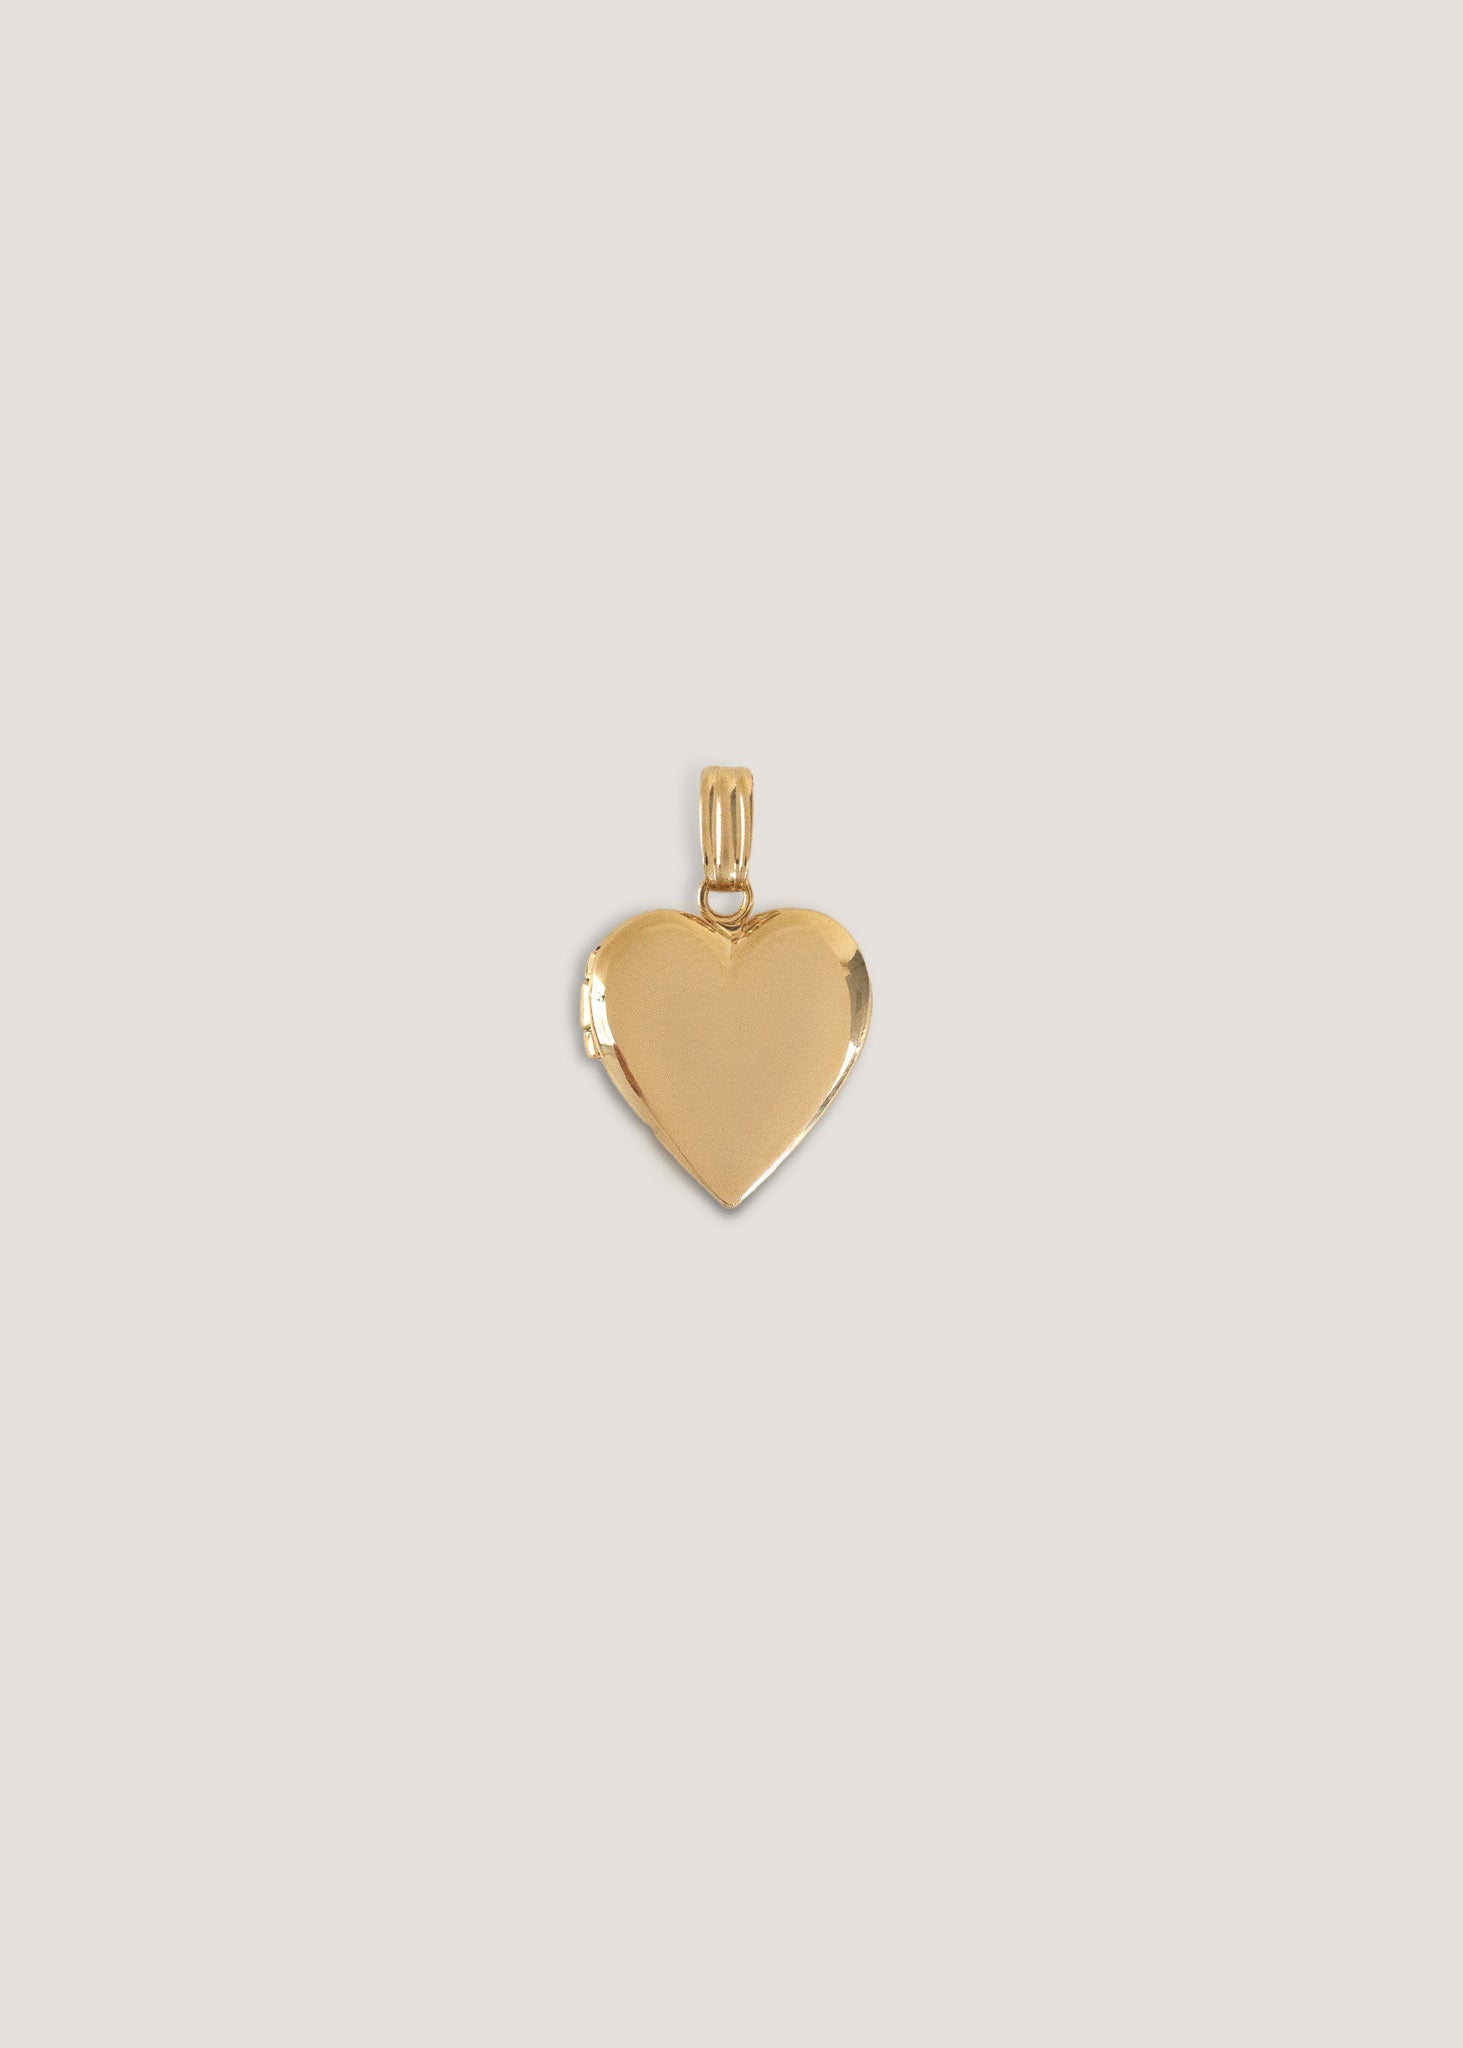 maison heart locket - Engraving